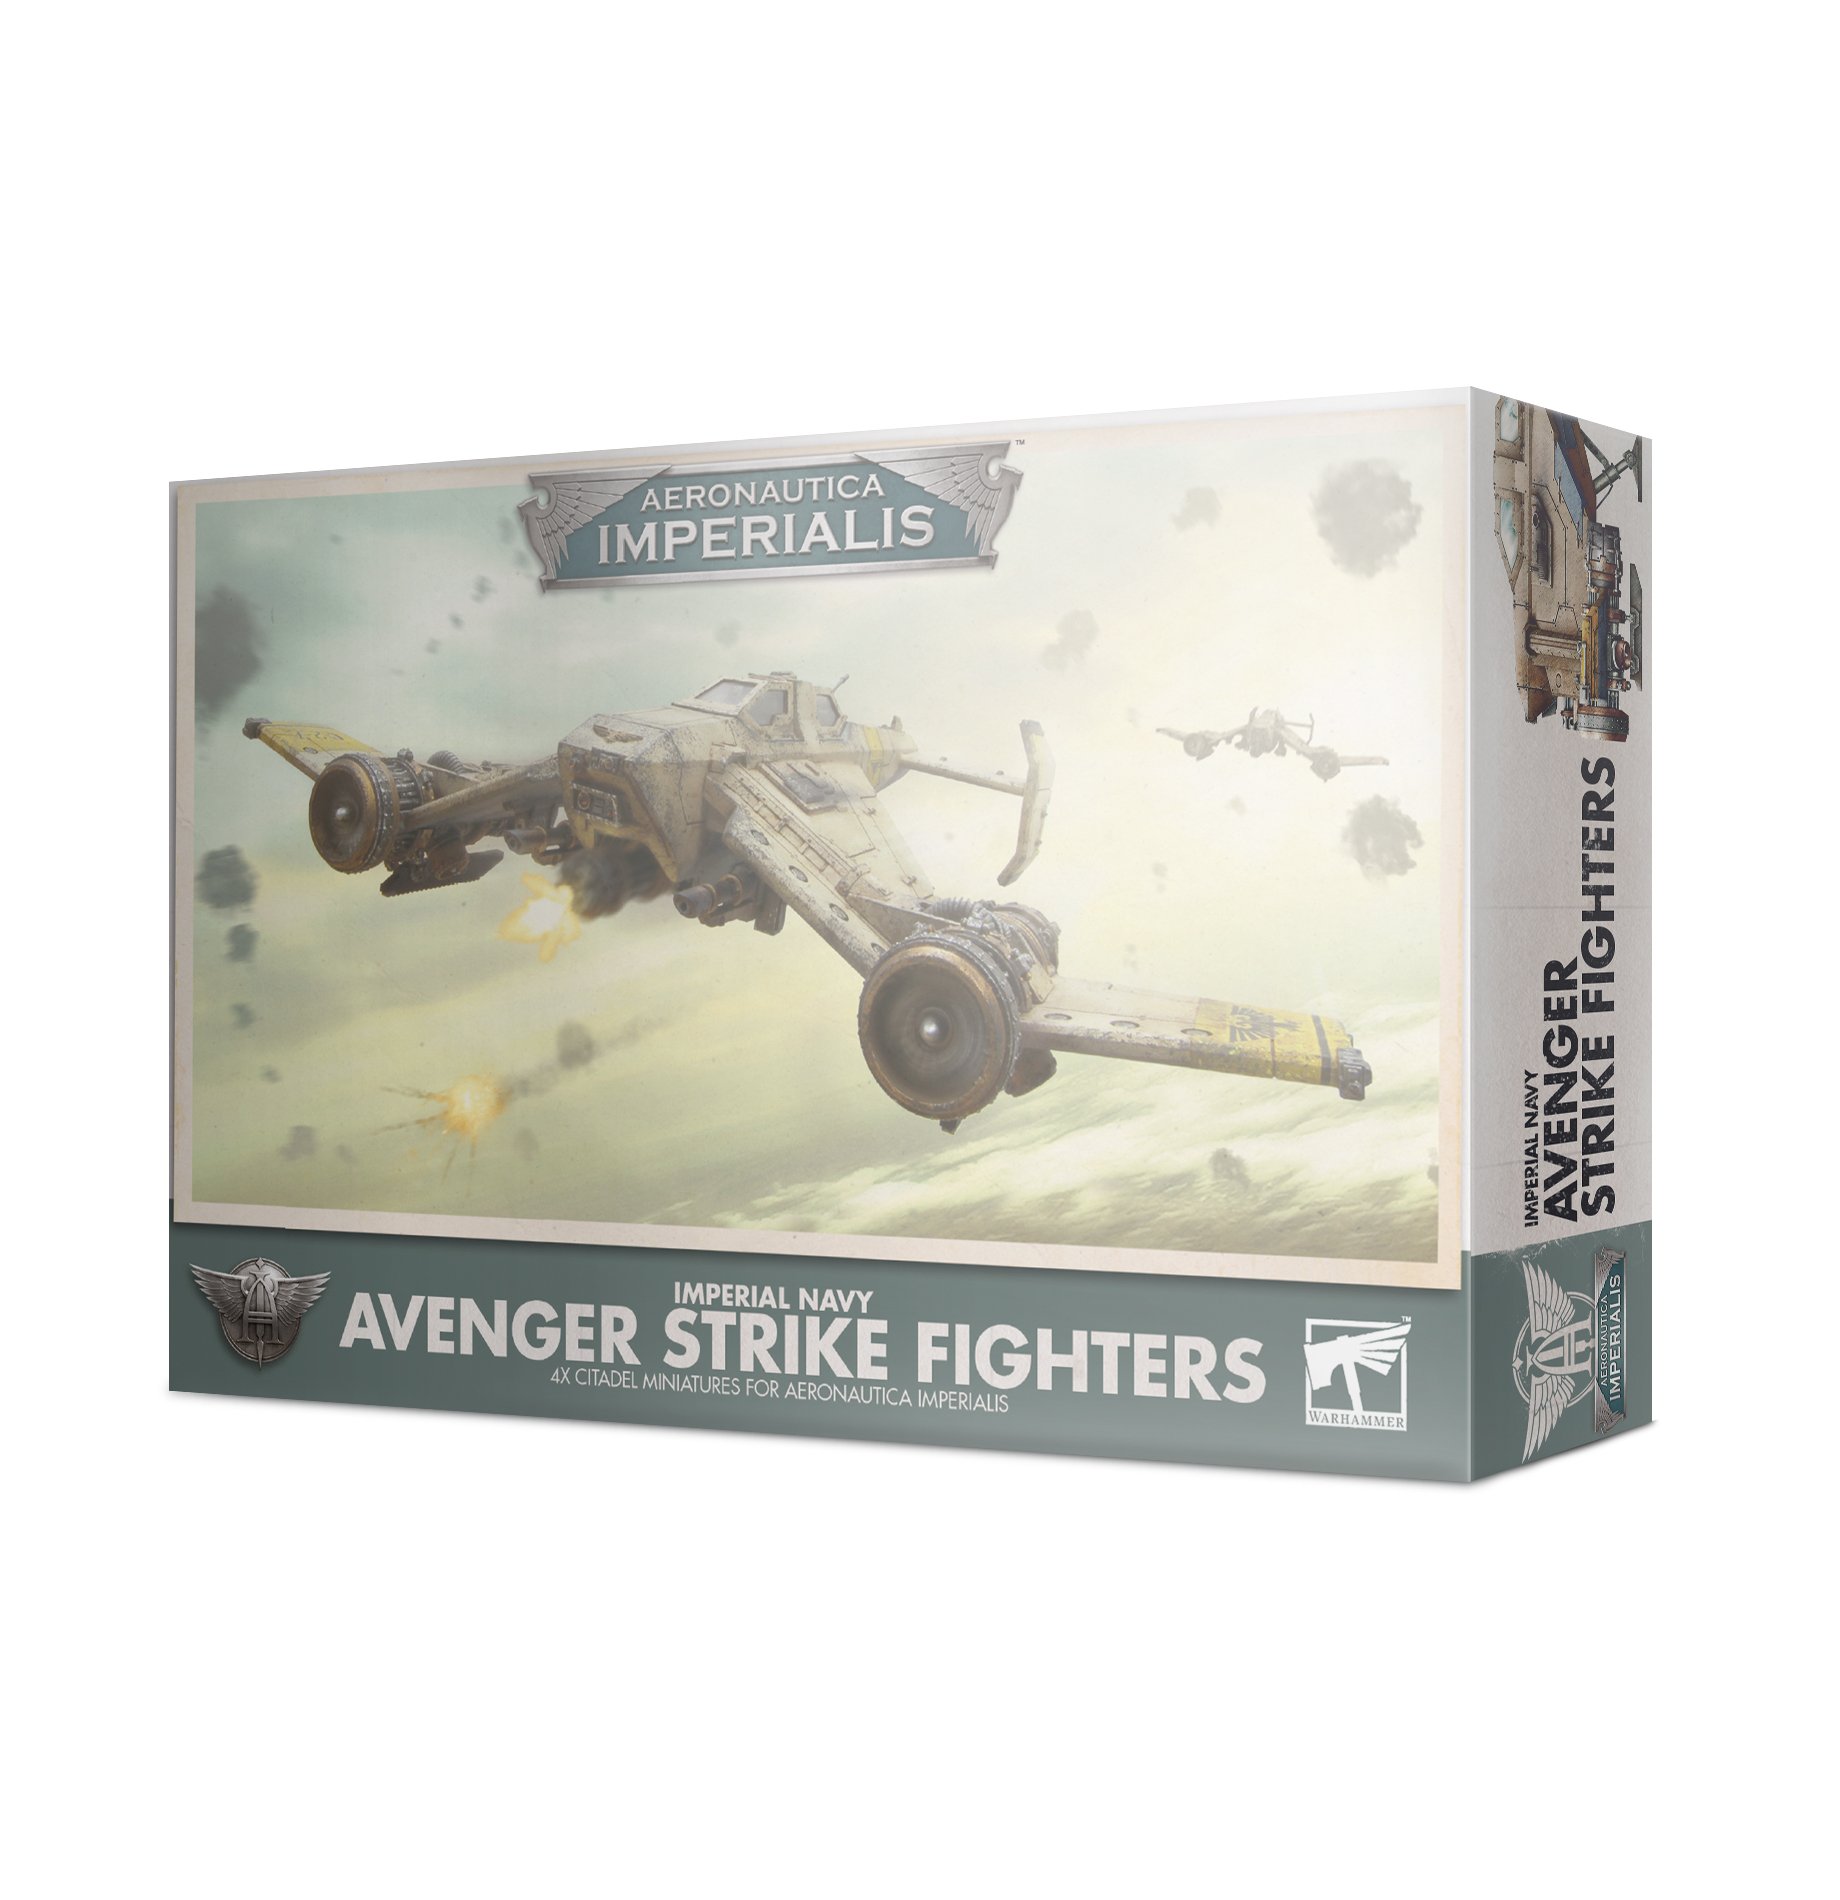 Aeronautica Imperialis: Imperial Navy Avenger Strike Fighters 